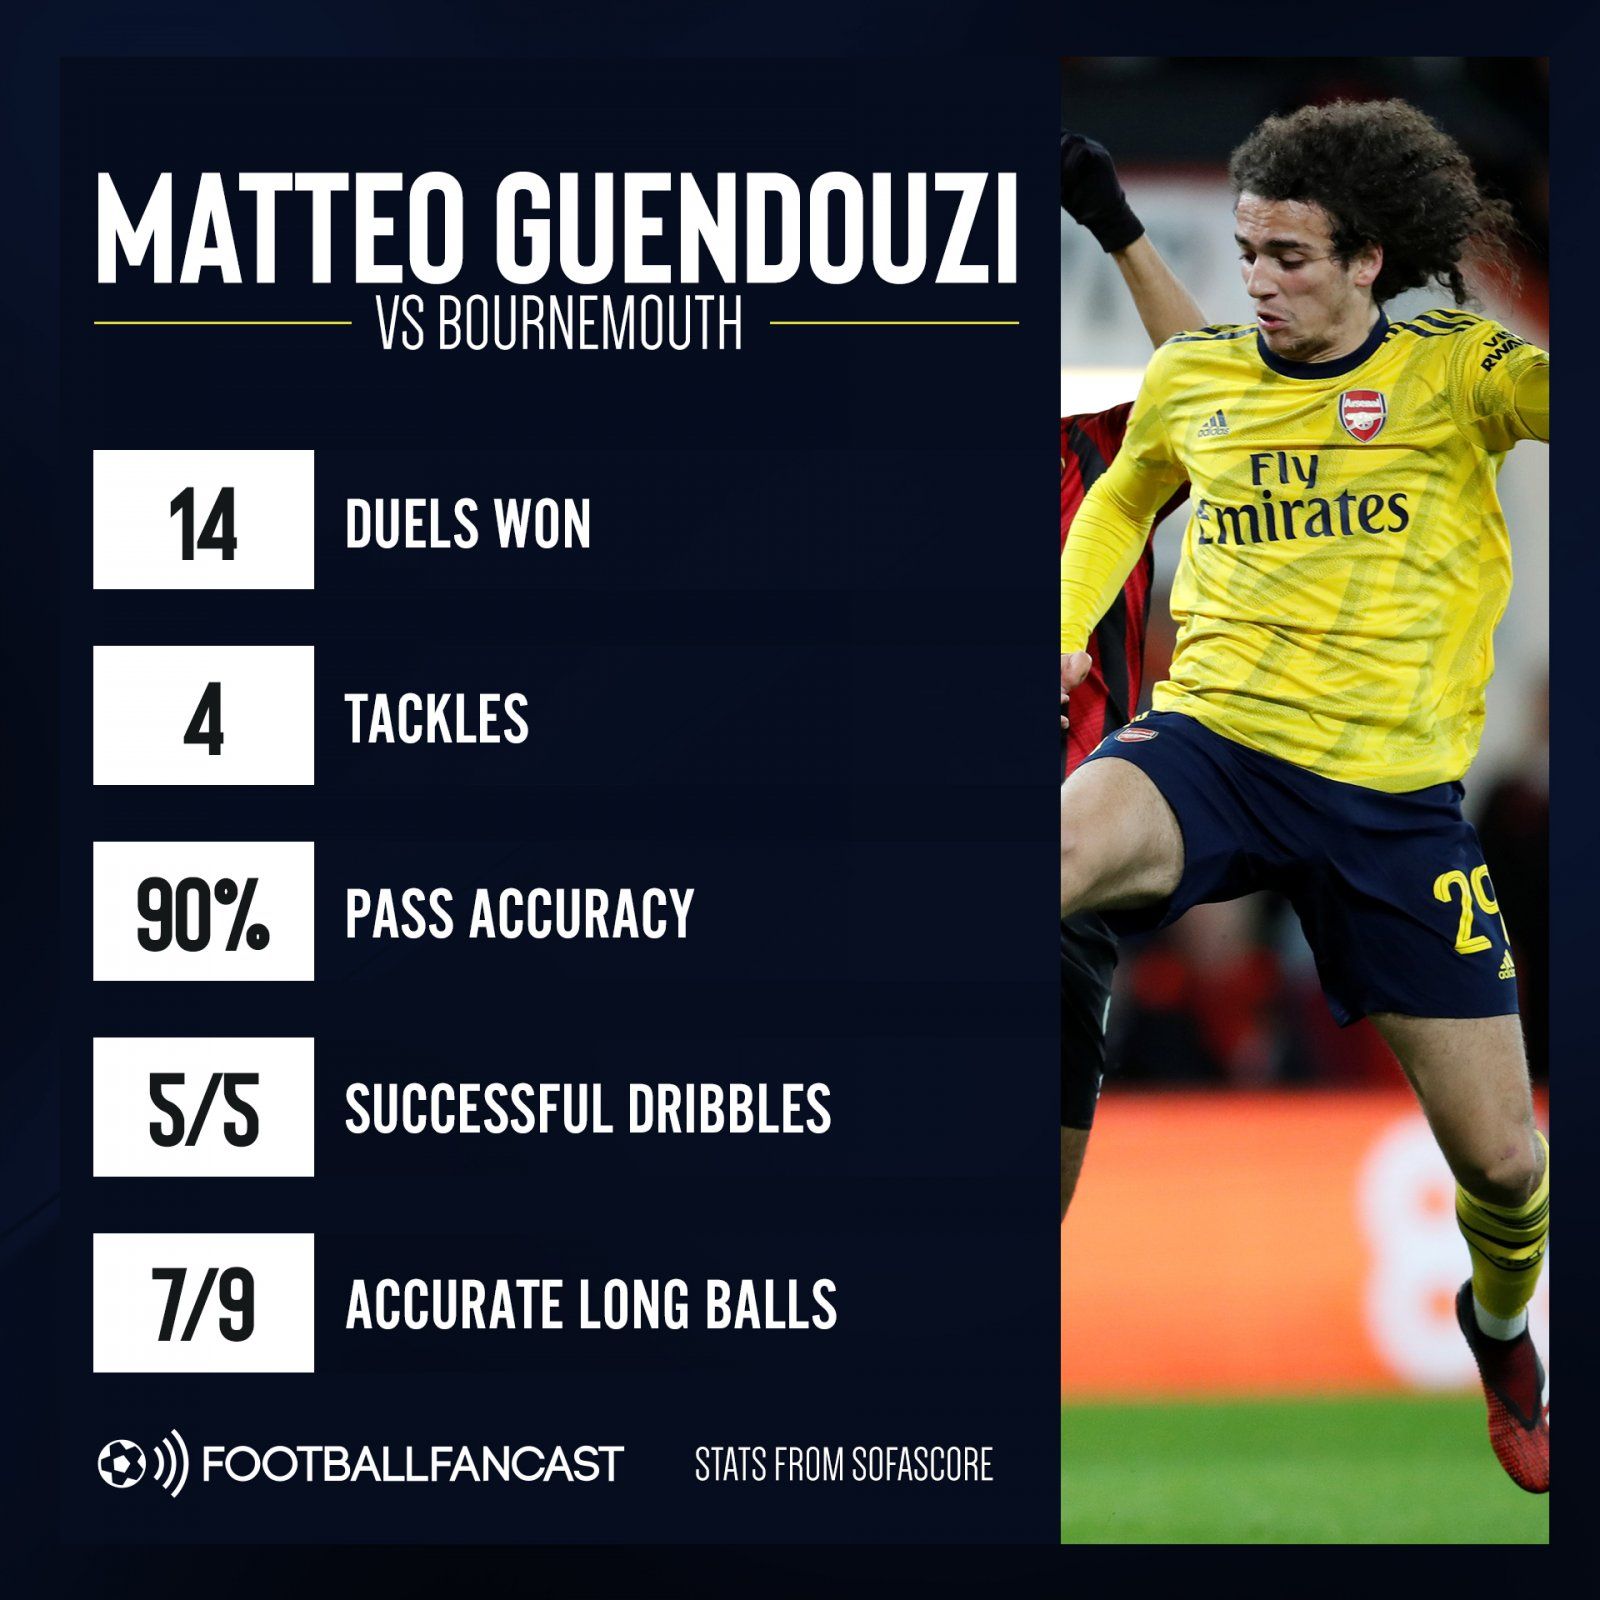 Matteo Guendouzi vs Bournemouth